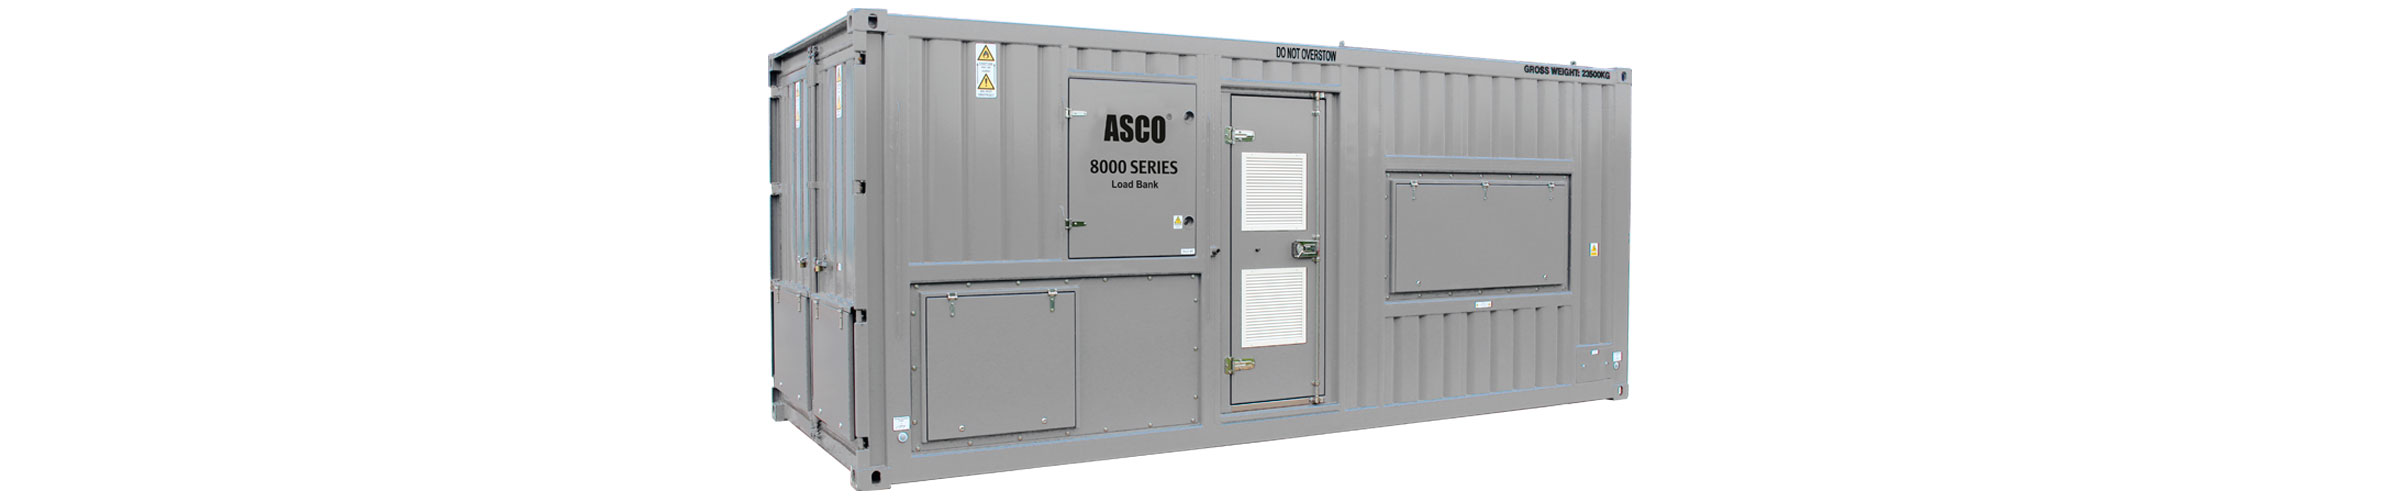 ASCO 8800 contrainerized MV load bank